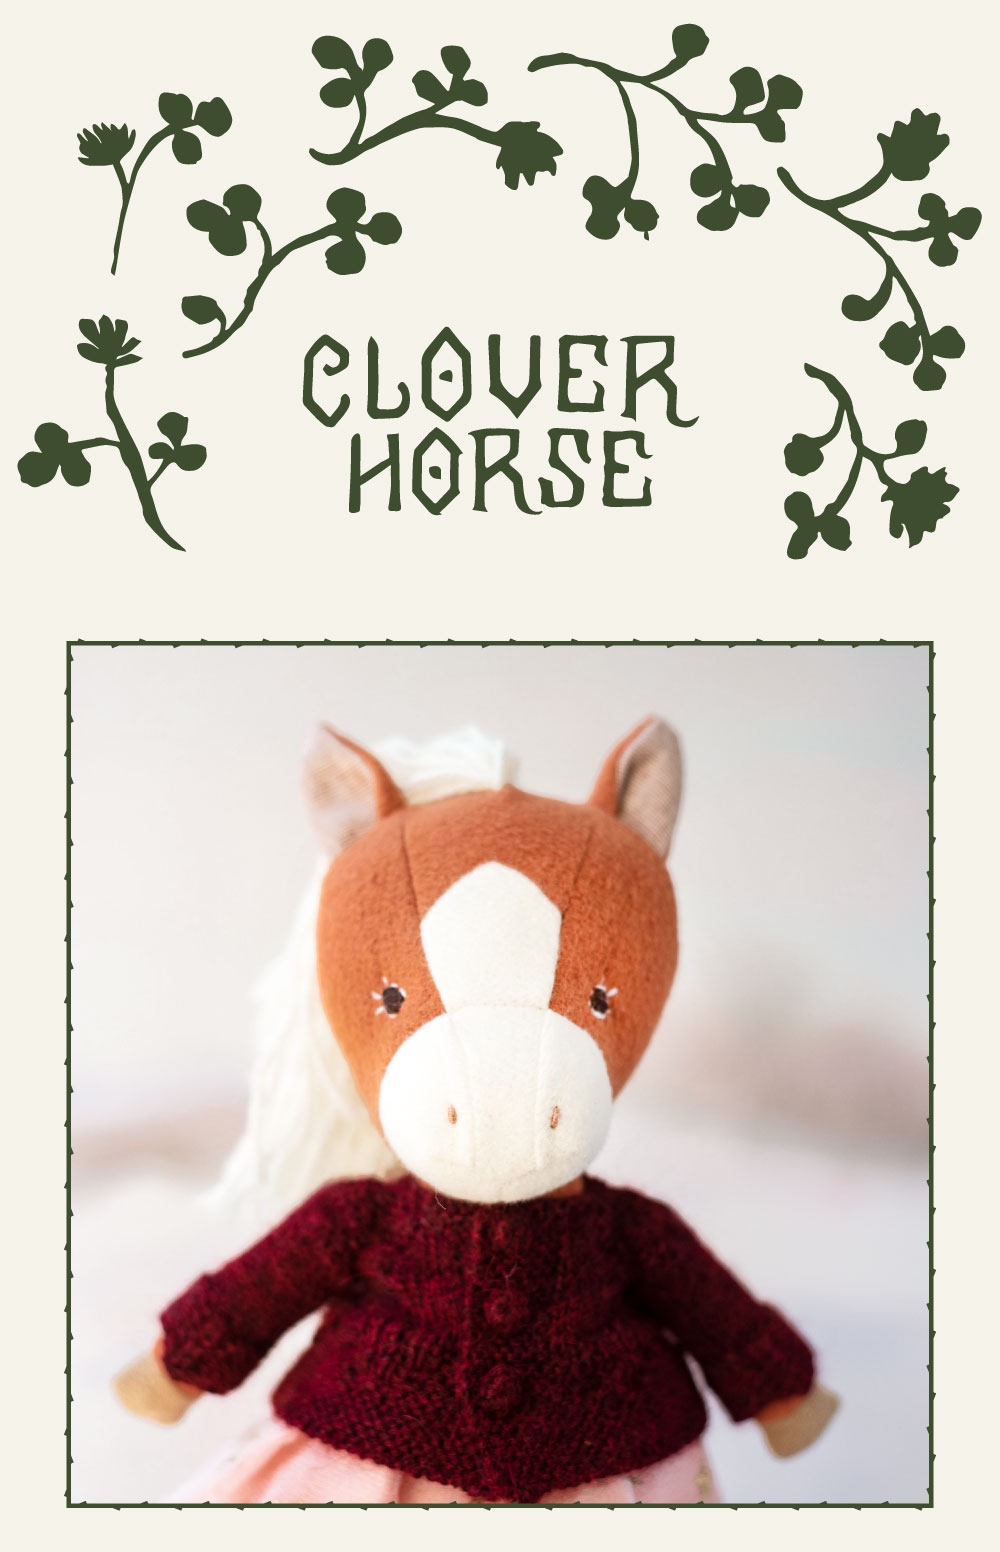 clover horse